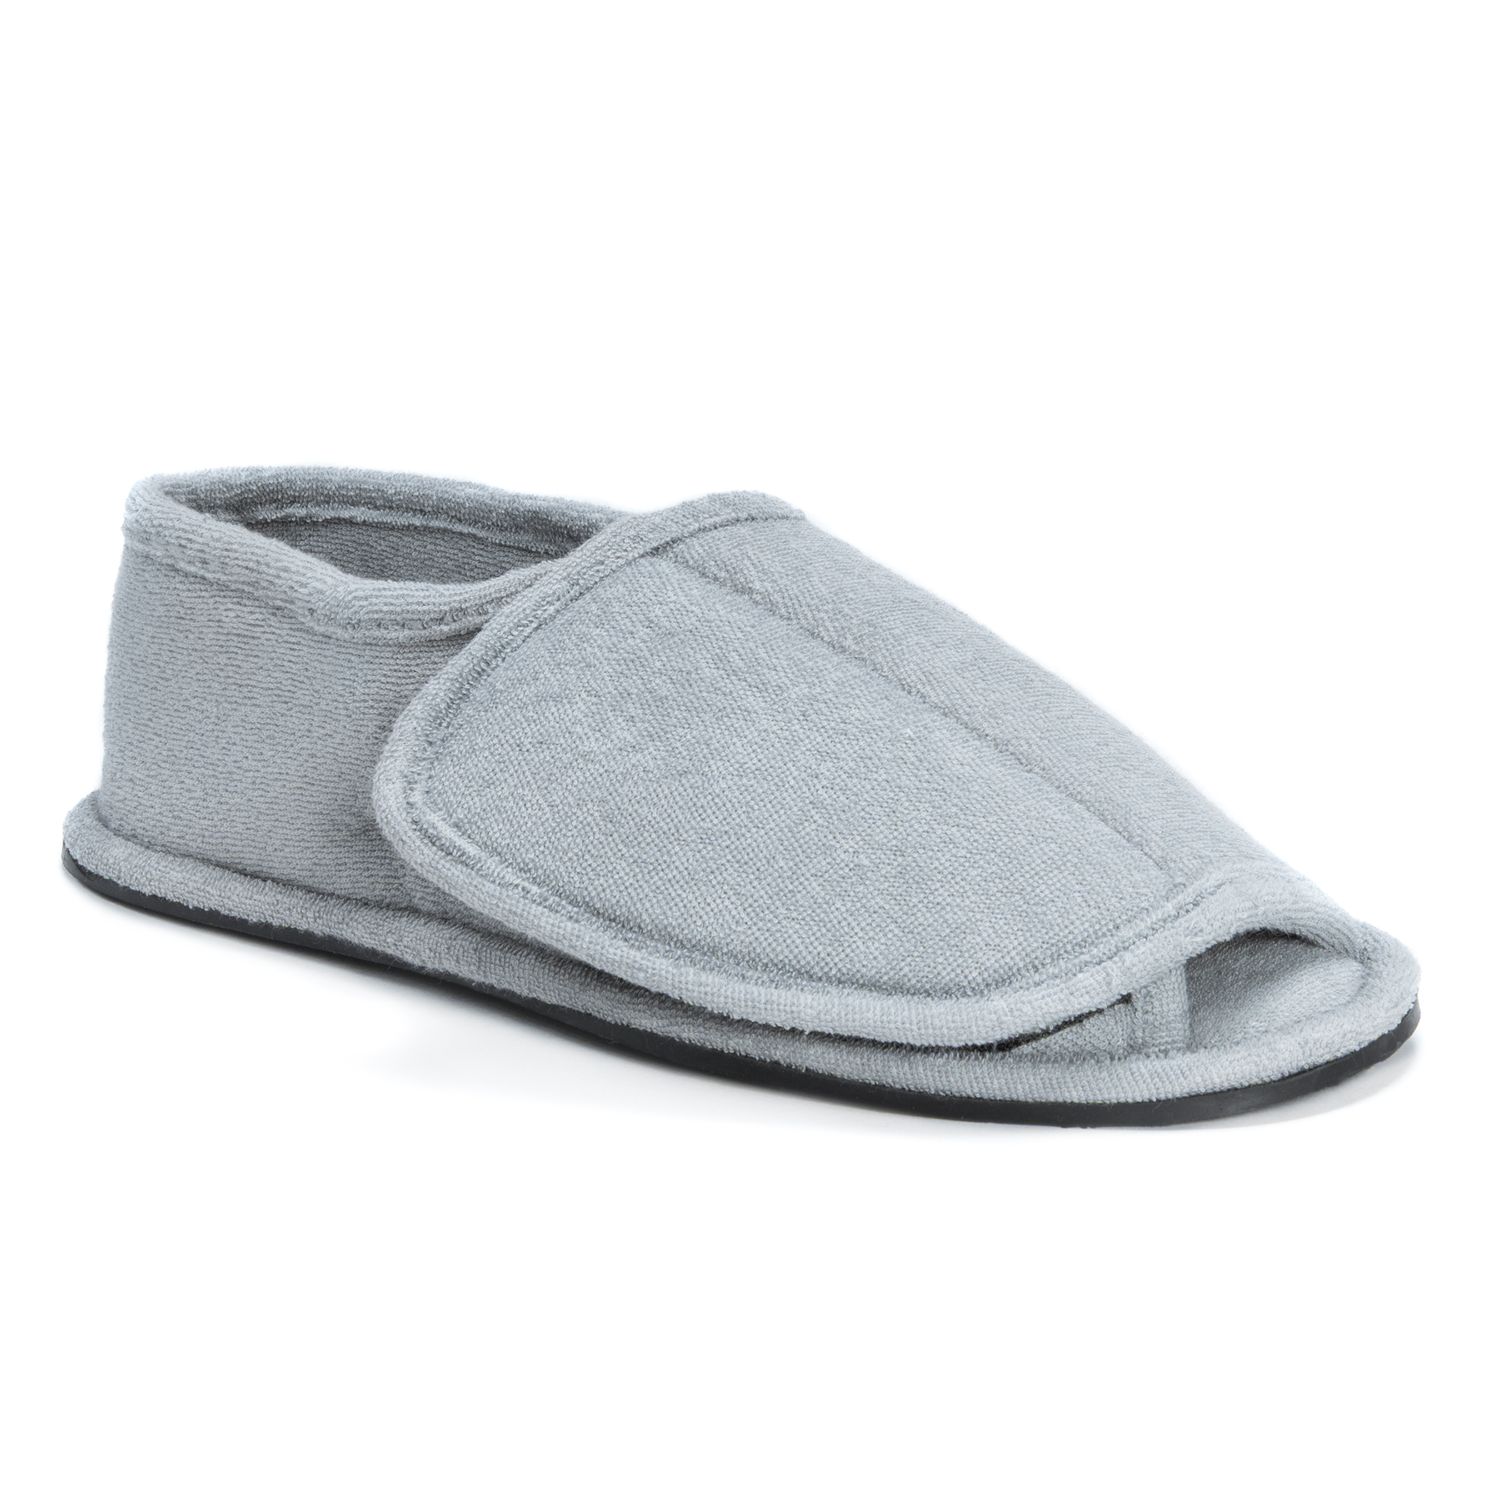 men's slippers open toe